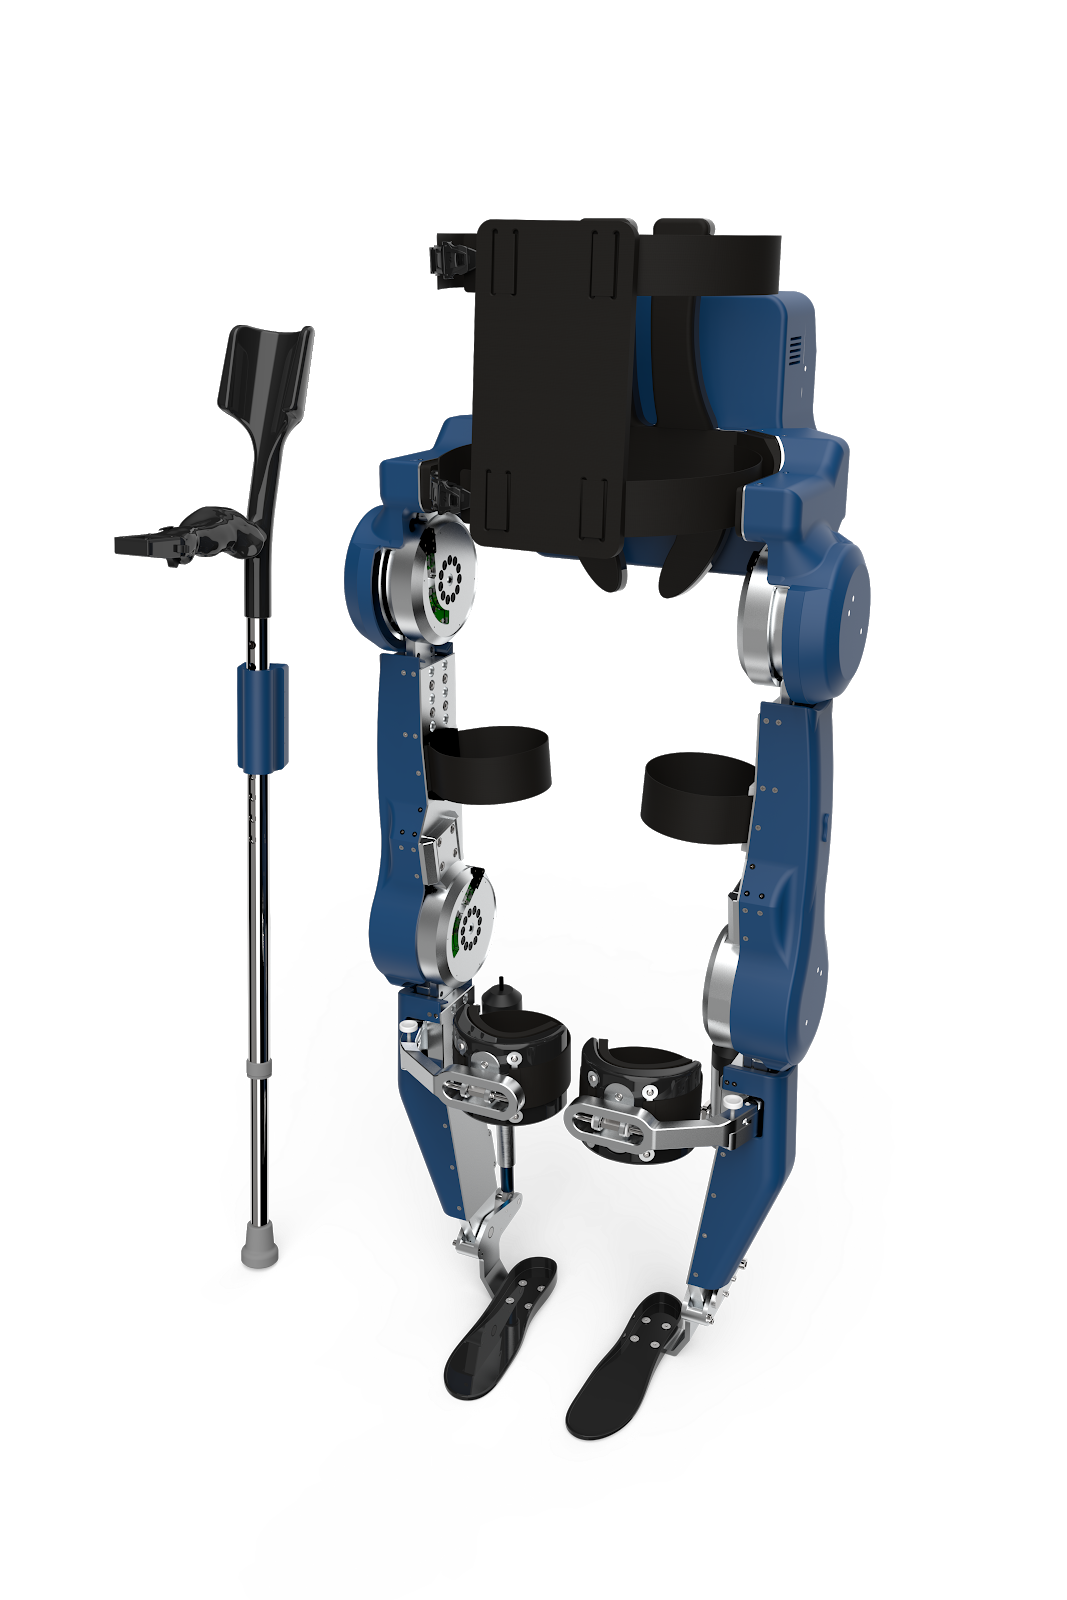 Exoskeleton with 30 PCBs